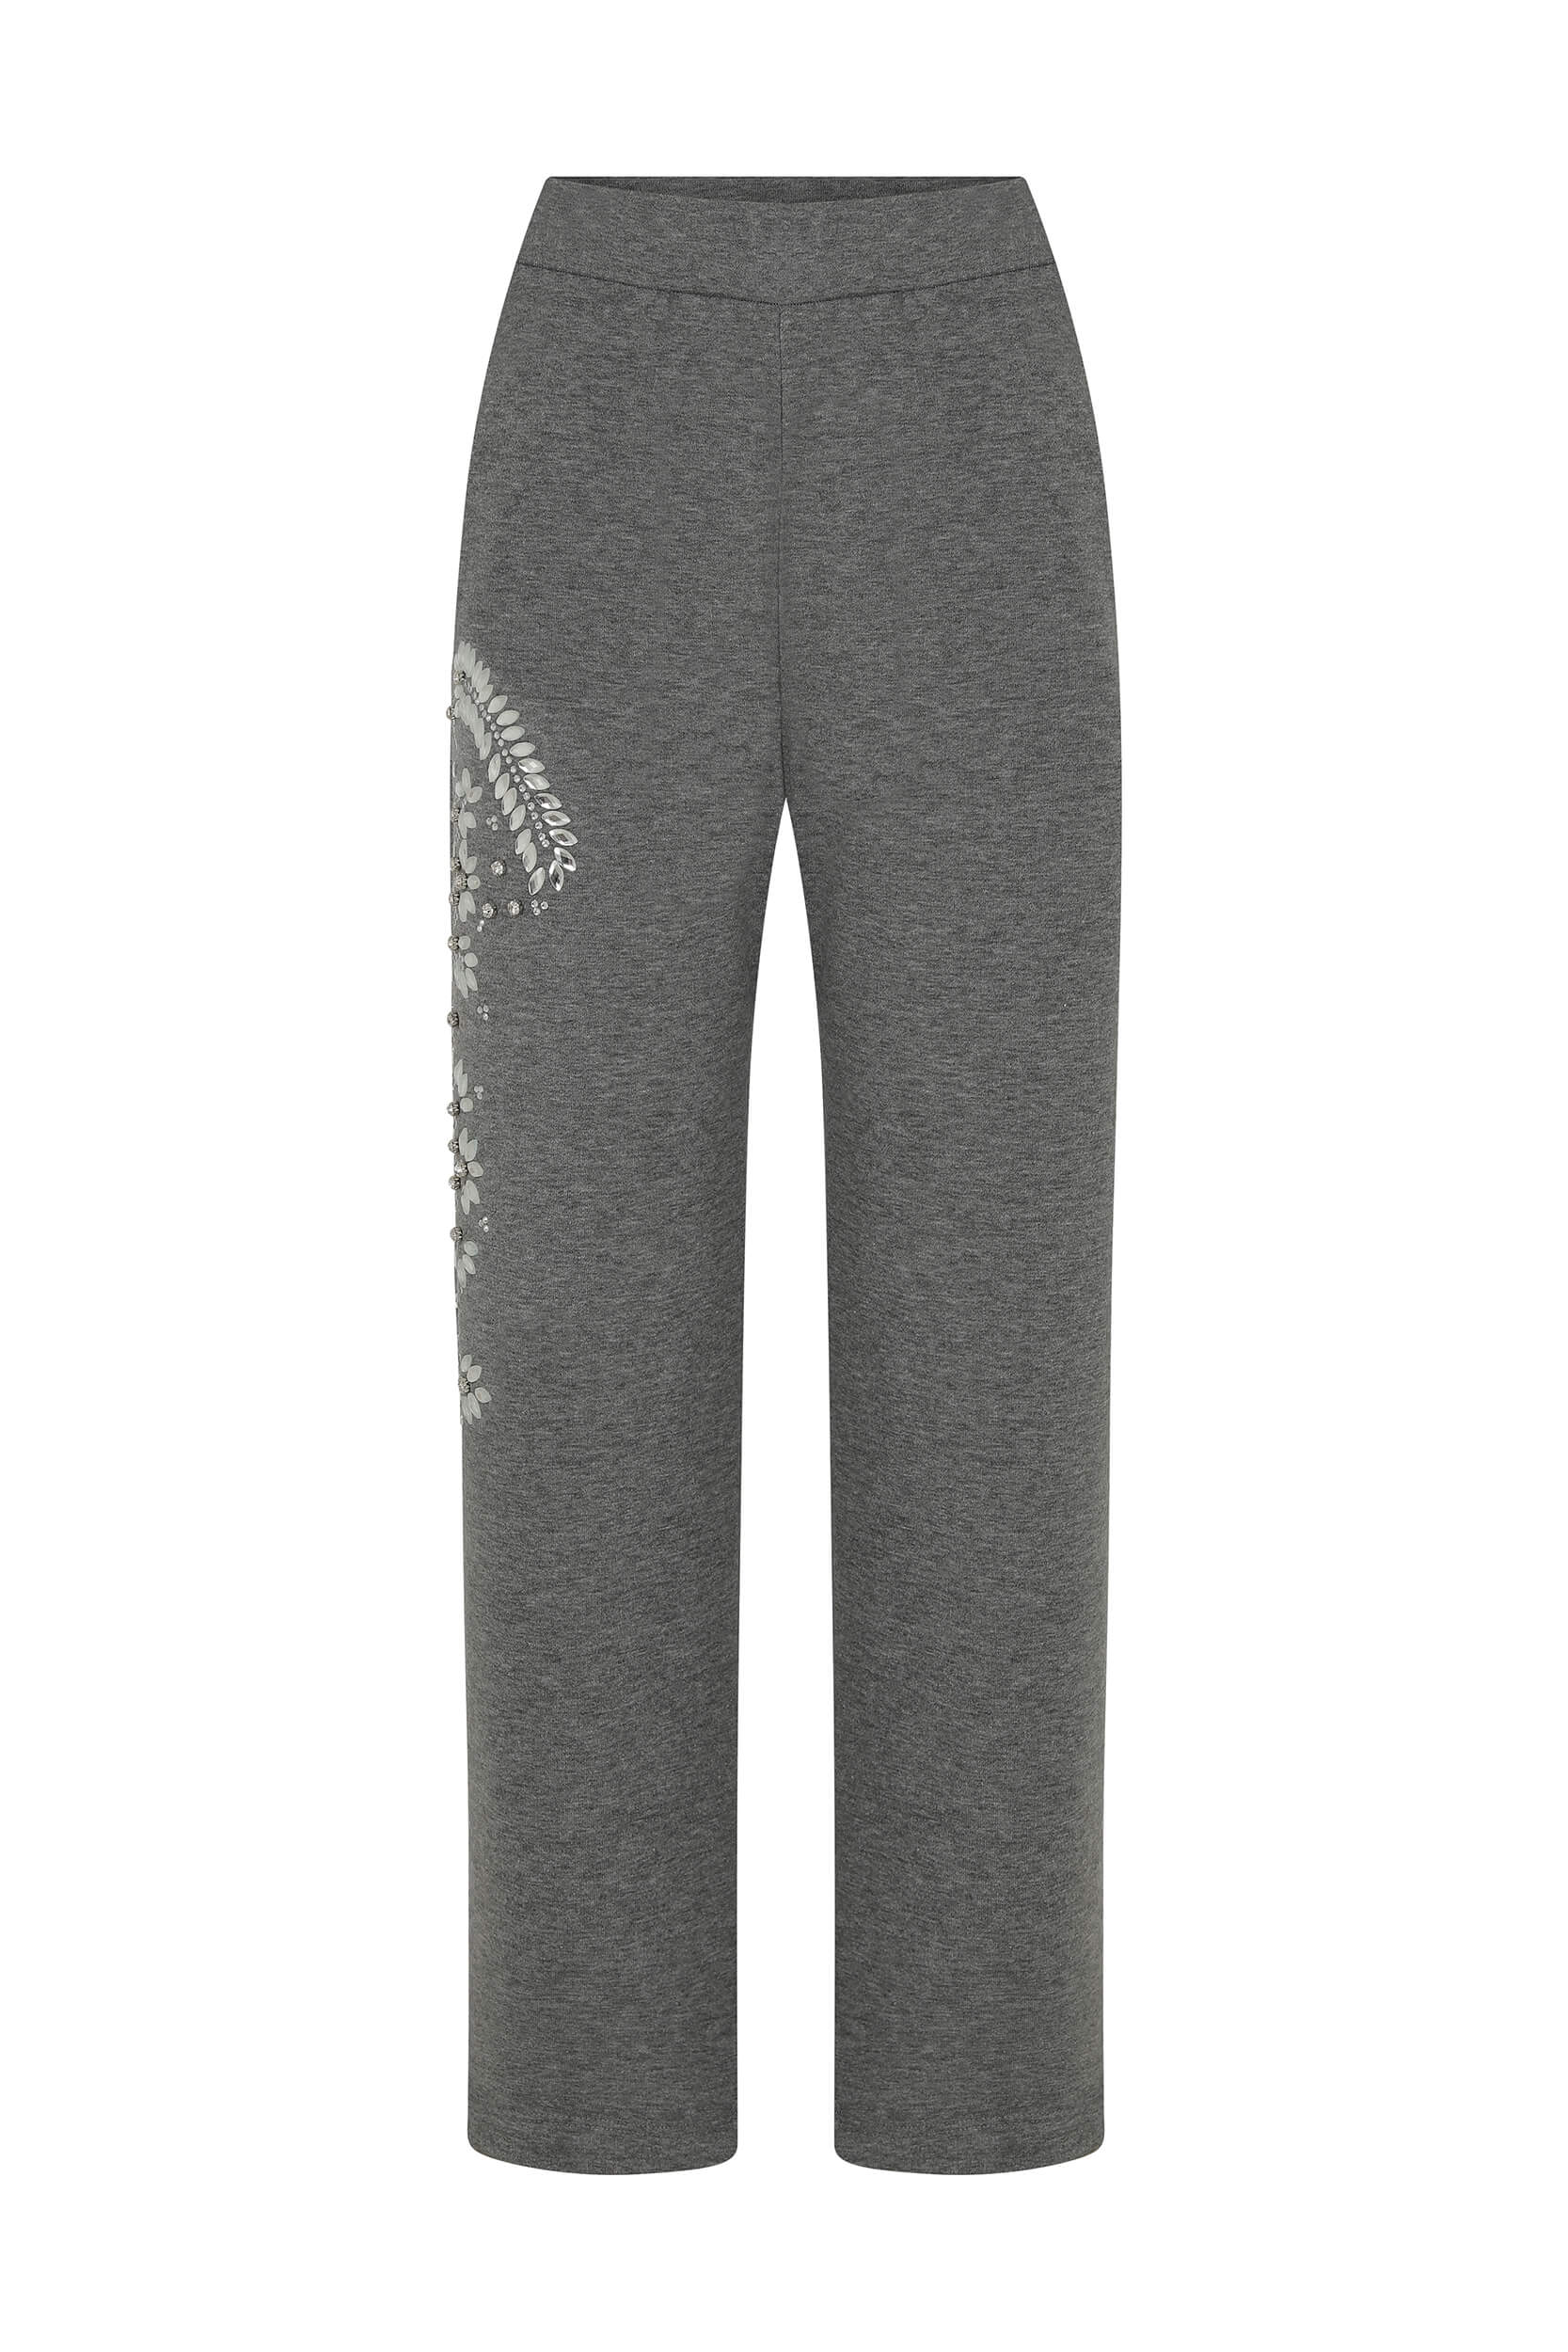 Grey Embroidered Sweatpants - Loungewear